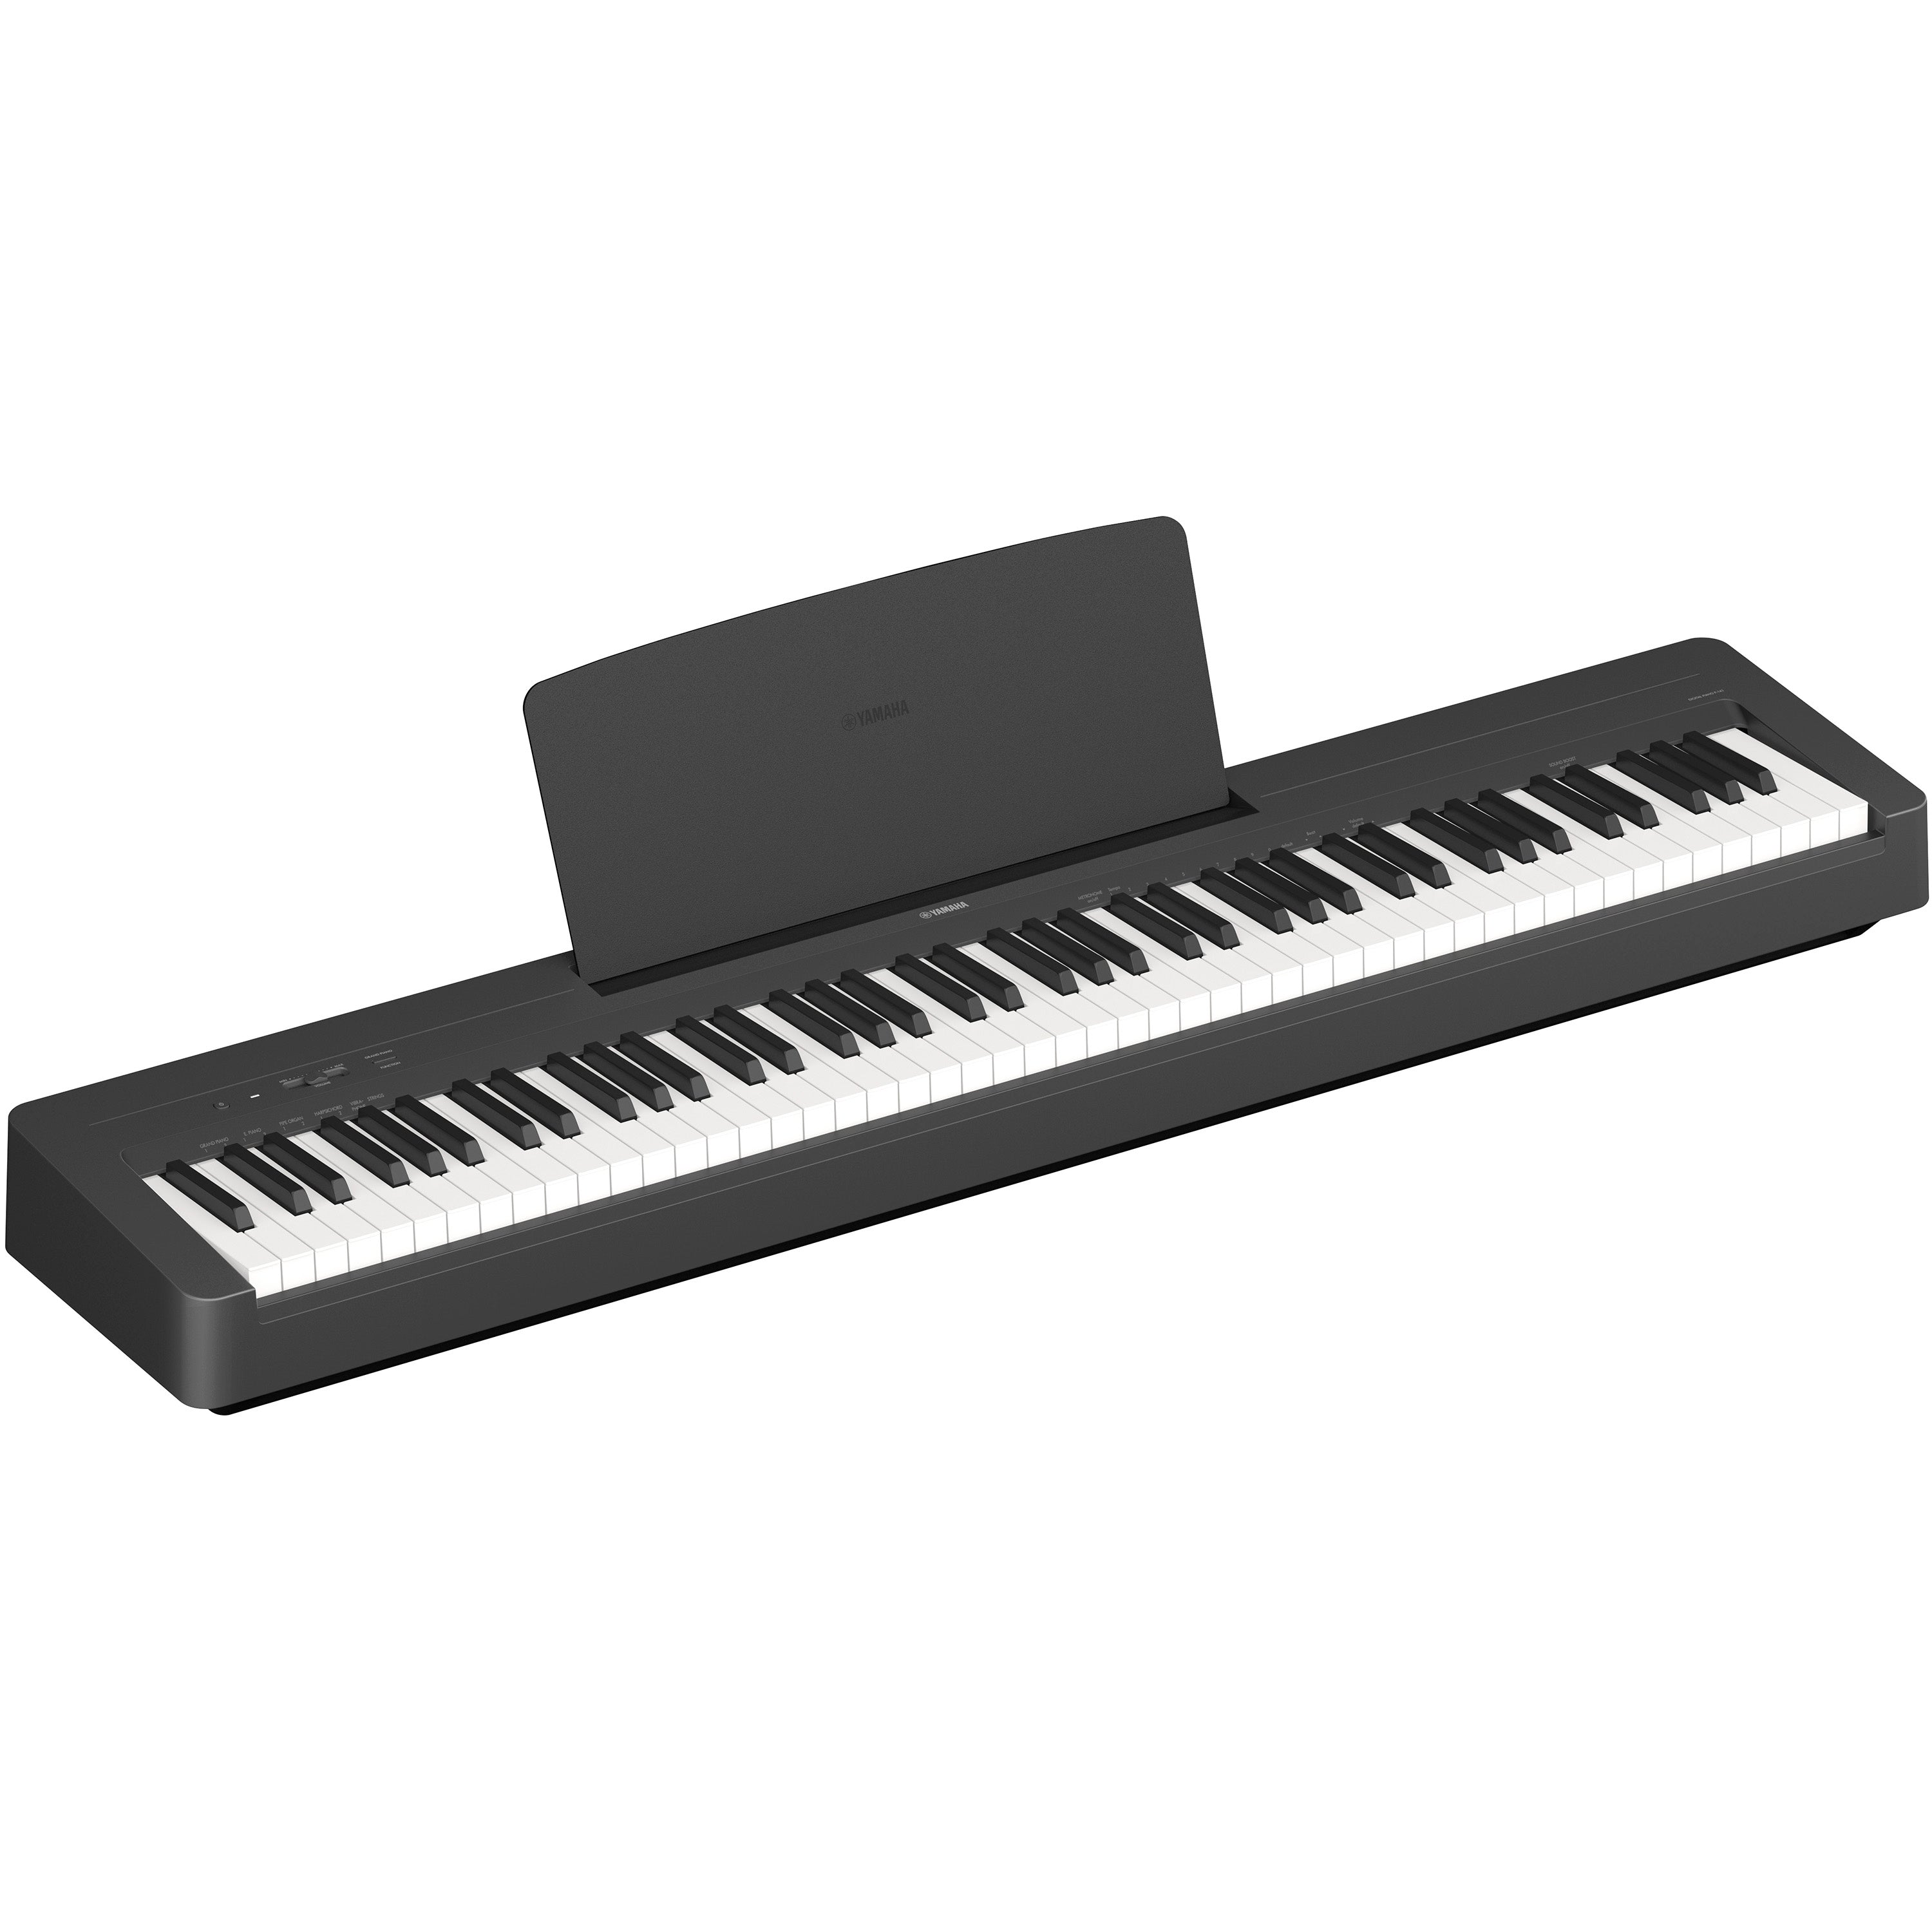 Yamaha P-143 Digital Piano - Black, View 1